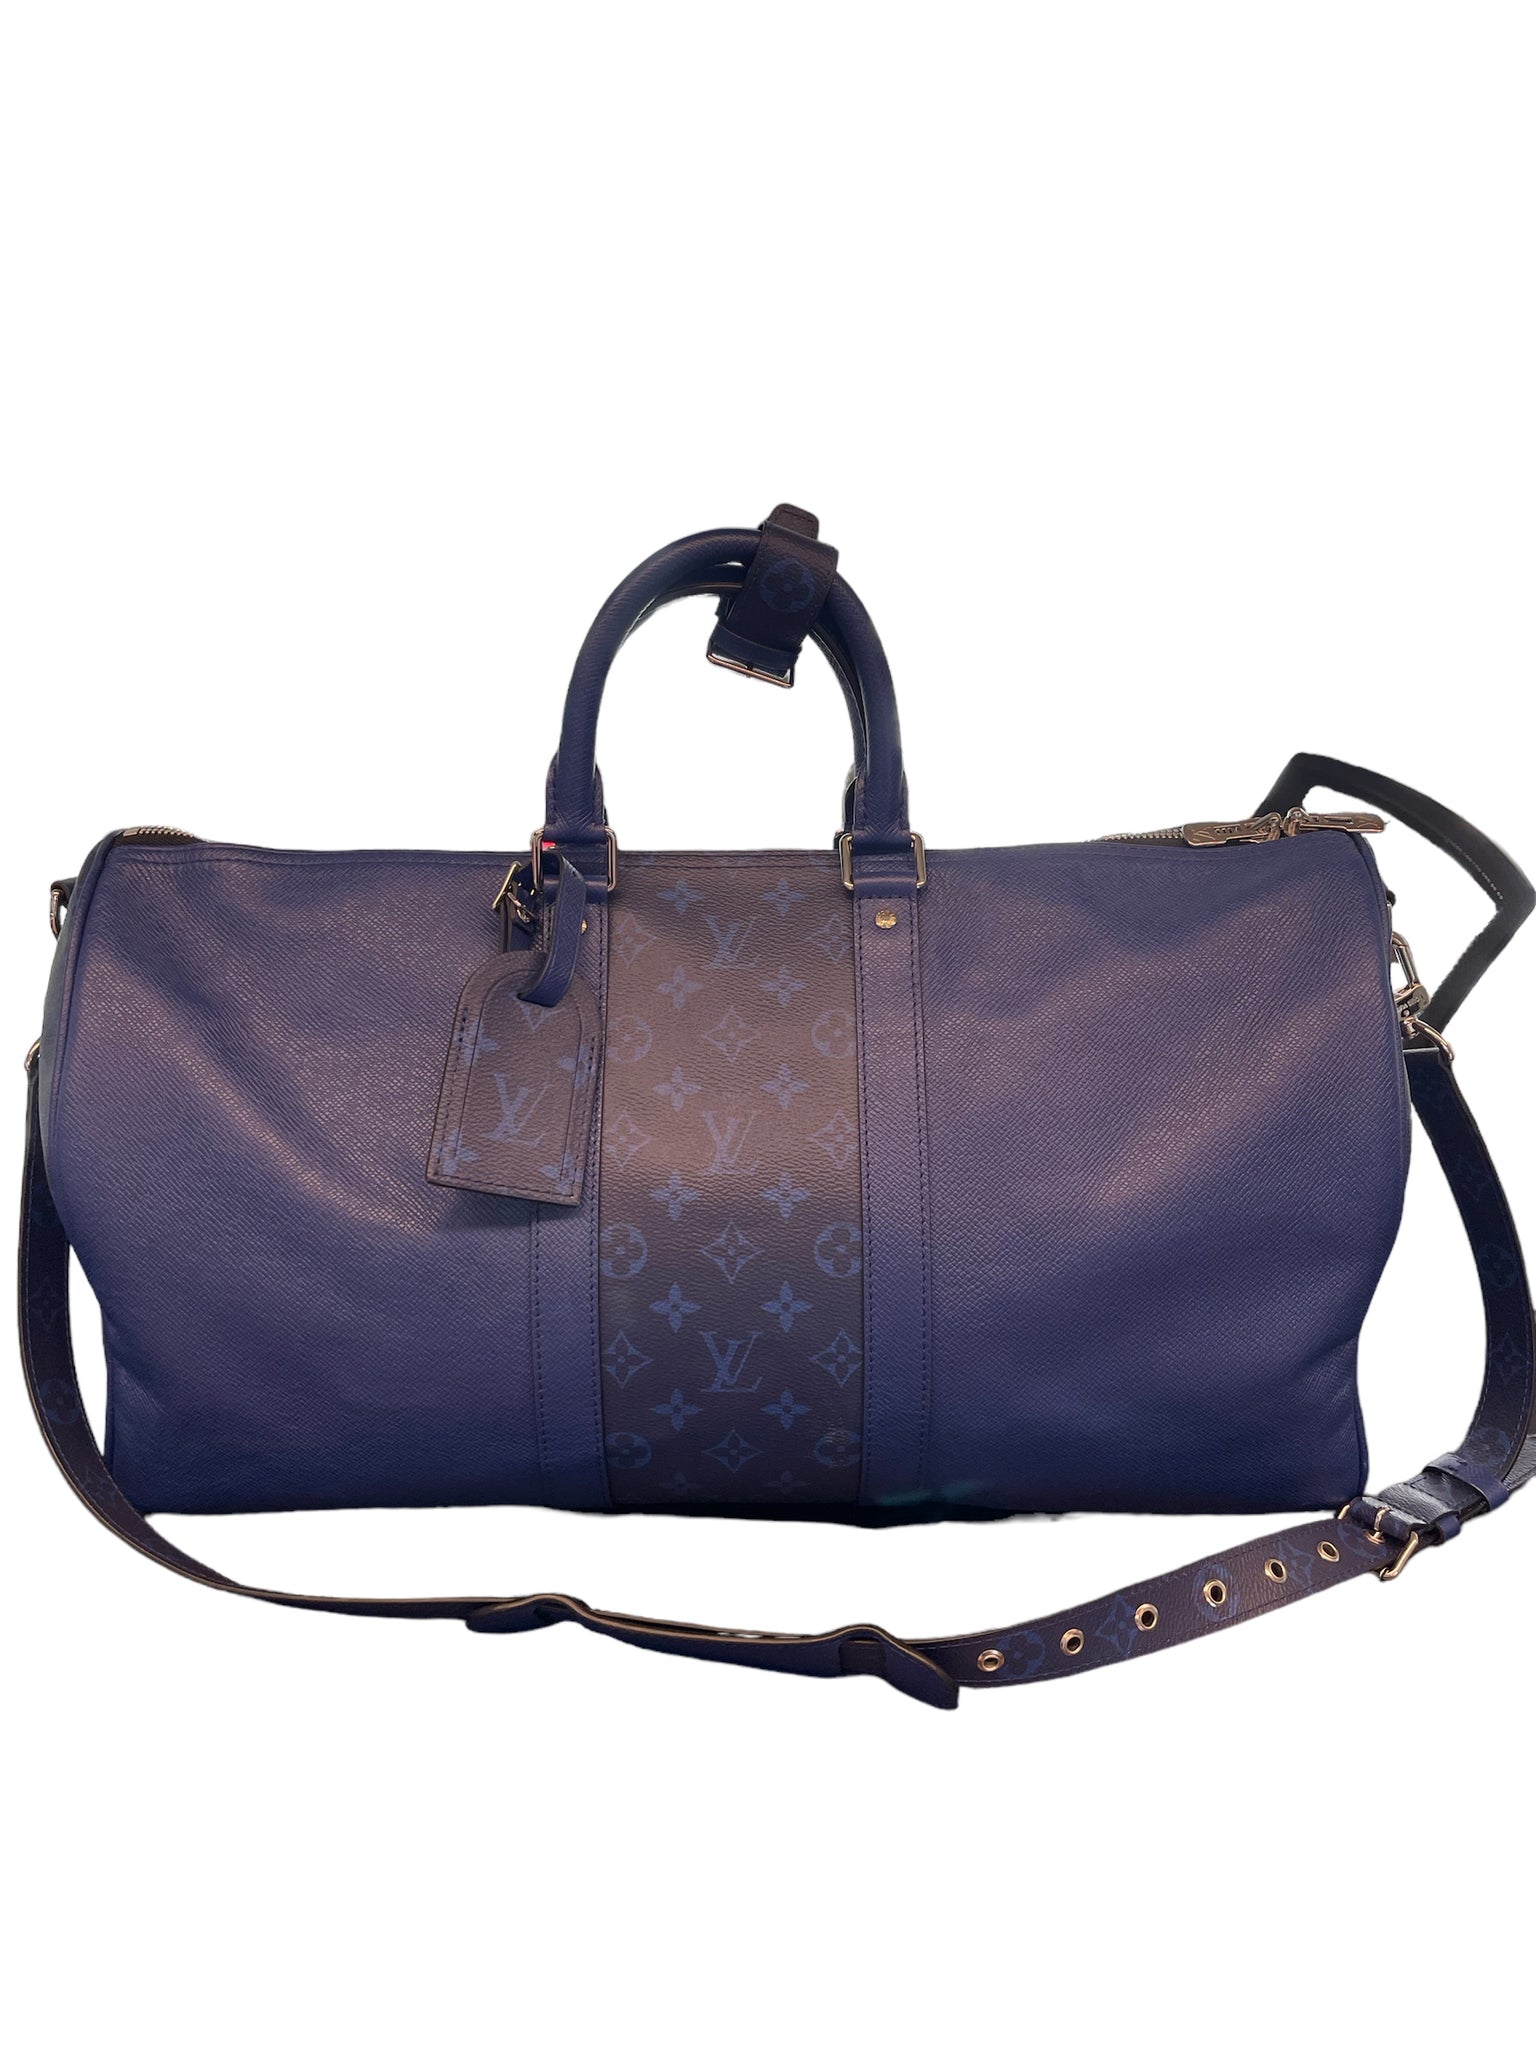 Louis Vuitton Monogram Duffle Bag "Blue"